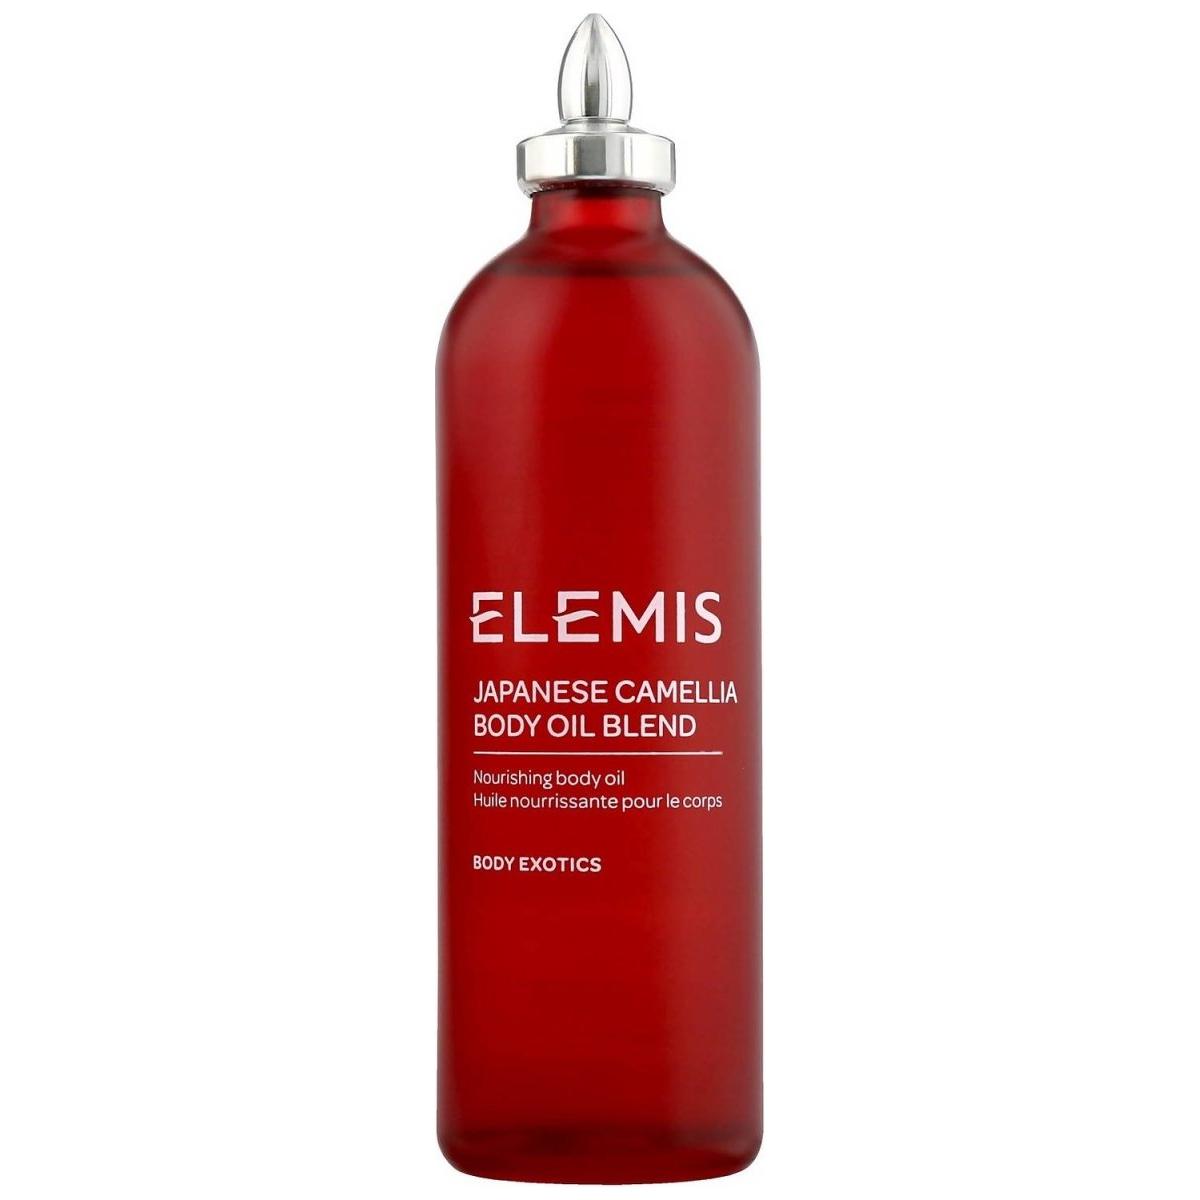 Elemis Japanese Camellia Body Oil Blend 100 ml - DG International Ventures Limited